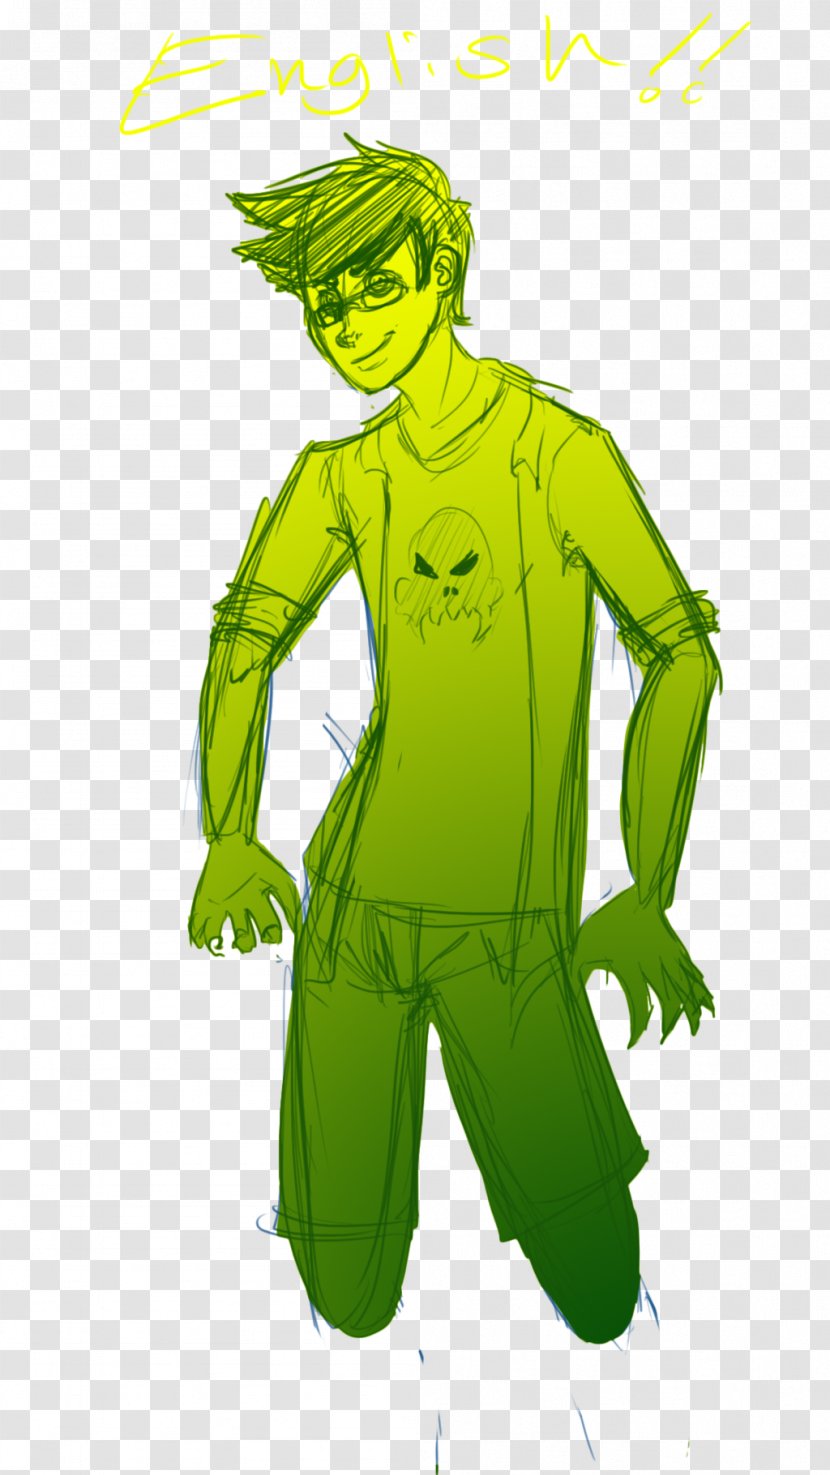 Human Illustration Green Boy Font Transparent PNG